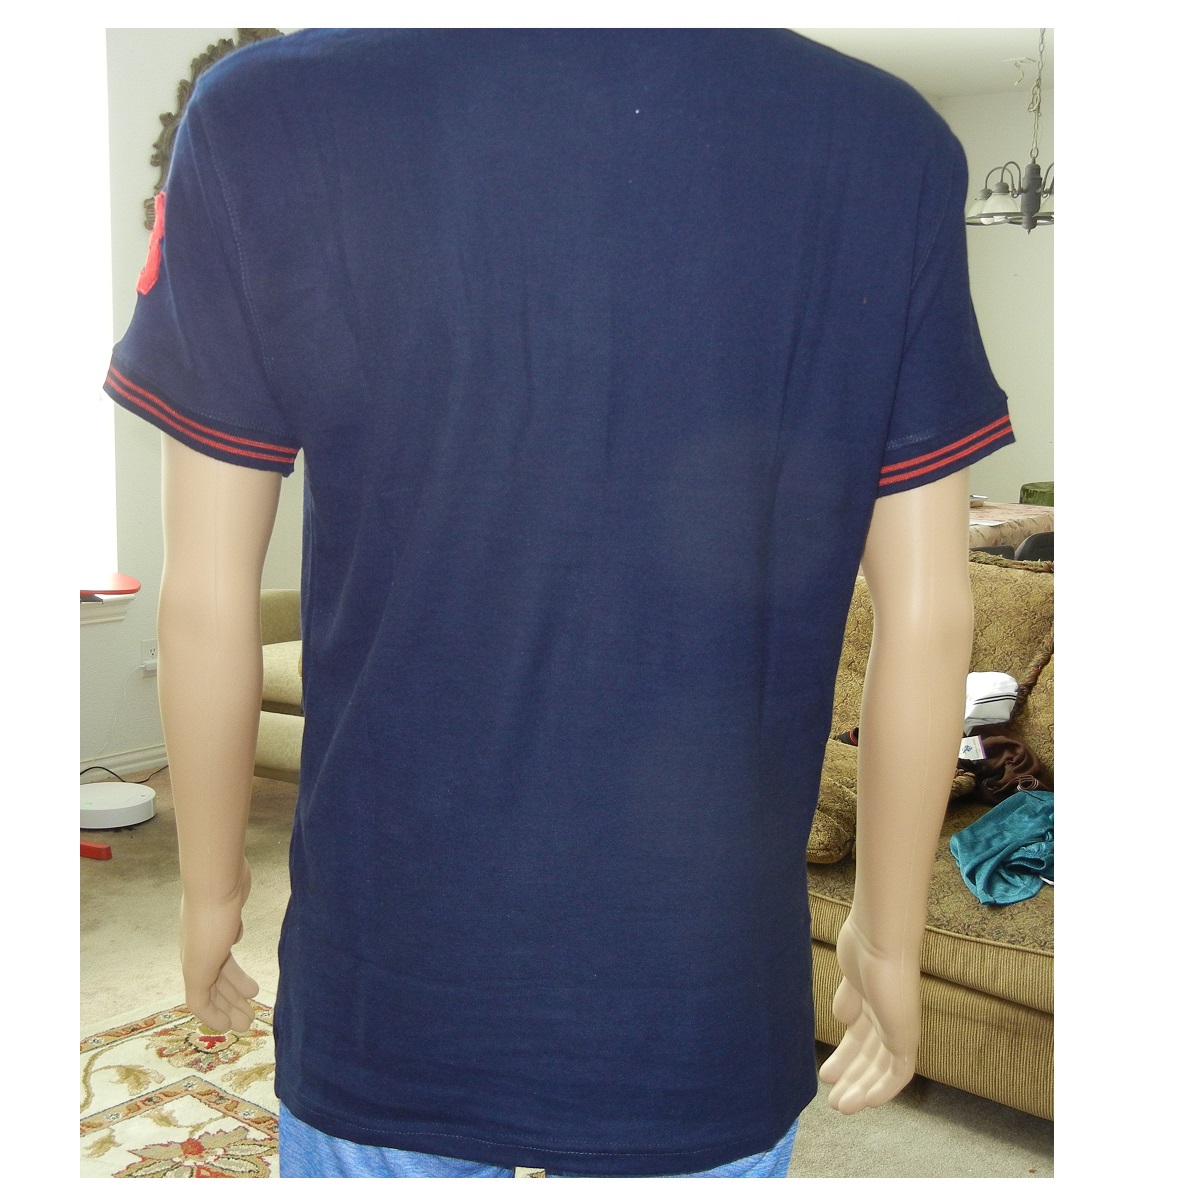 Men's Polo Shirt Golf Shirt Short Sleeve Cotton Shirt with Collar